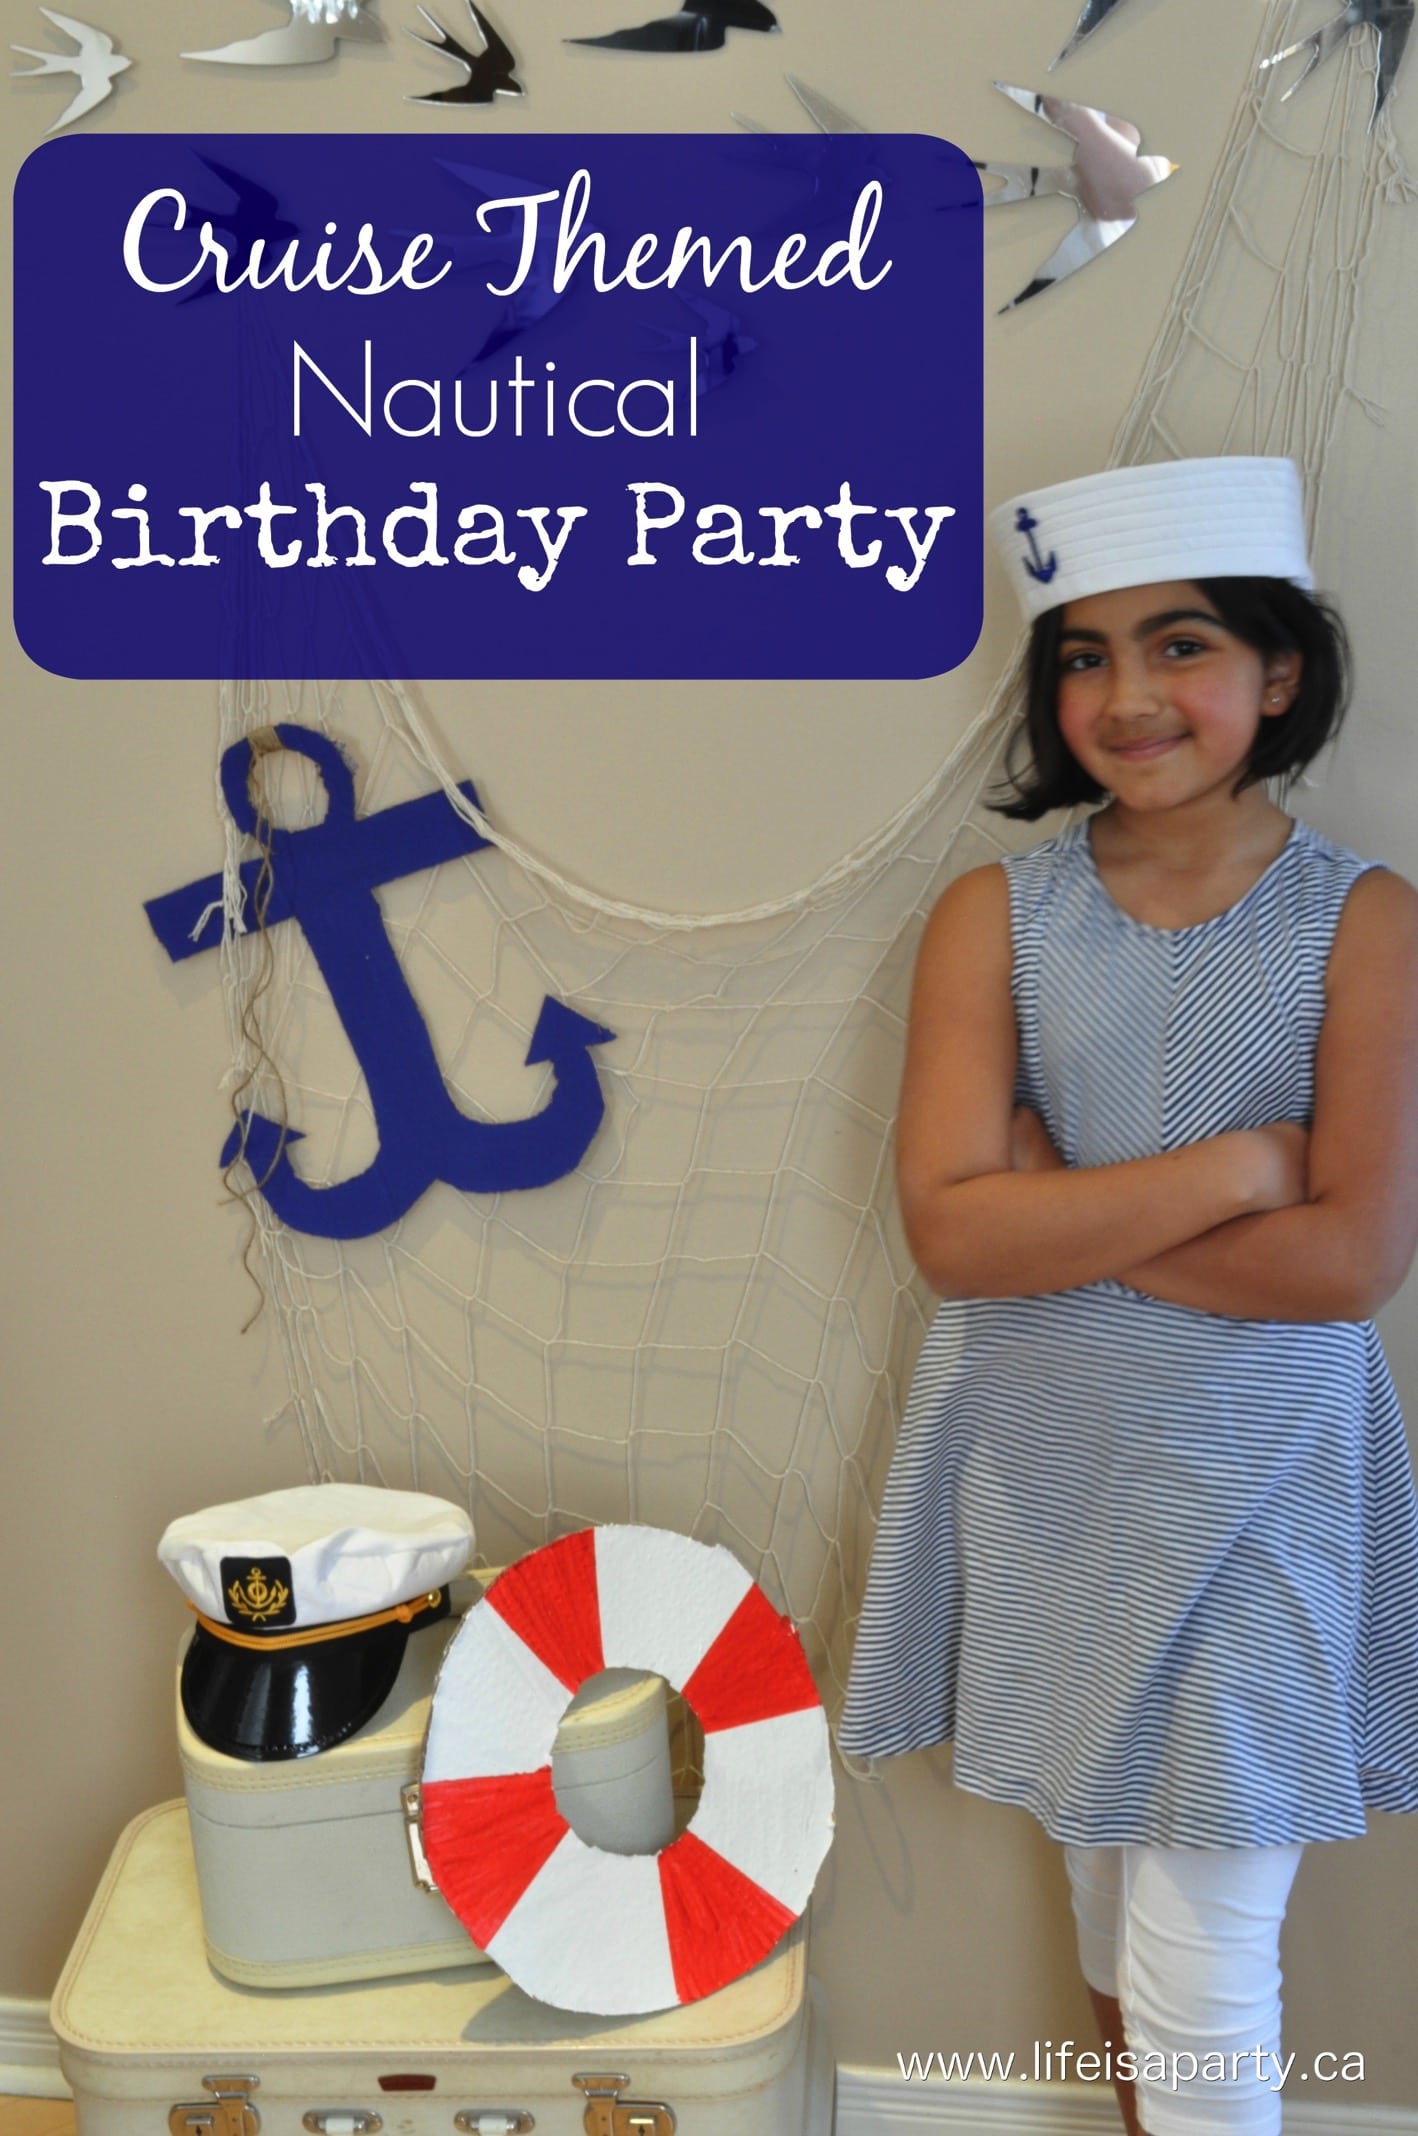 Cruise Themed Nautical Birthday Party